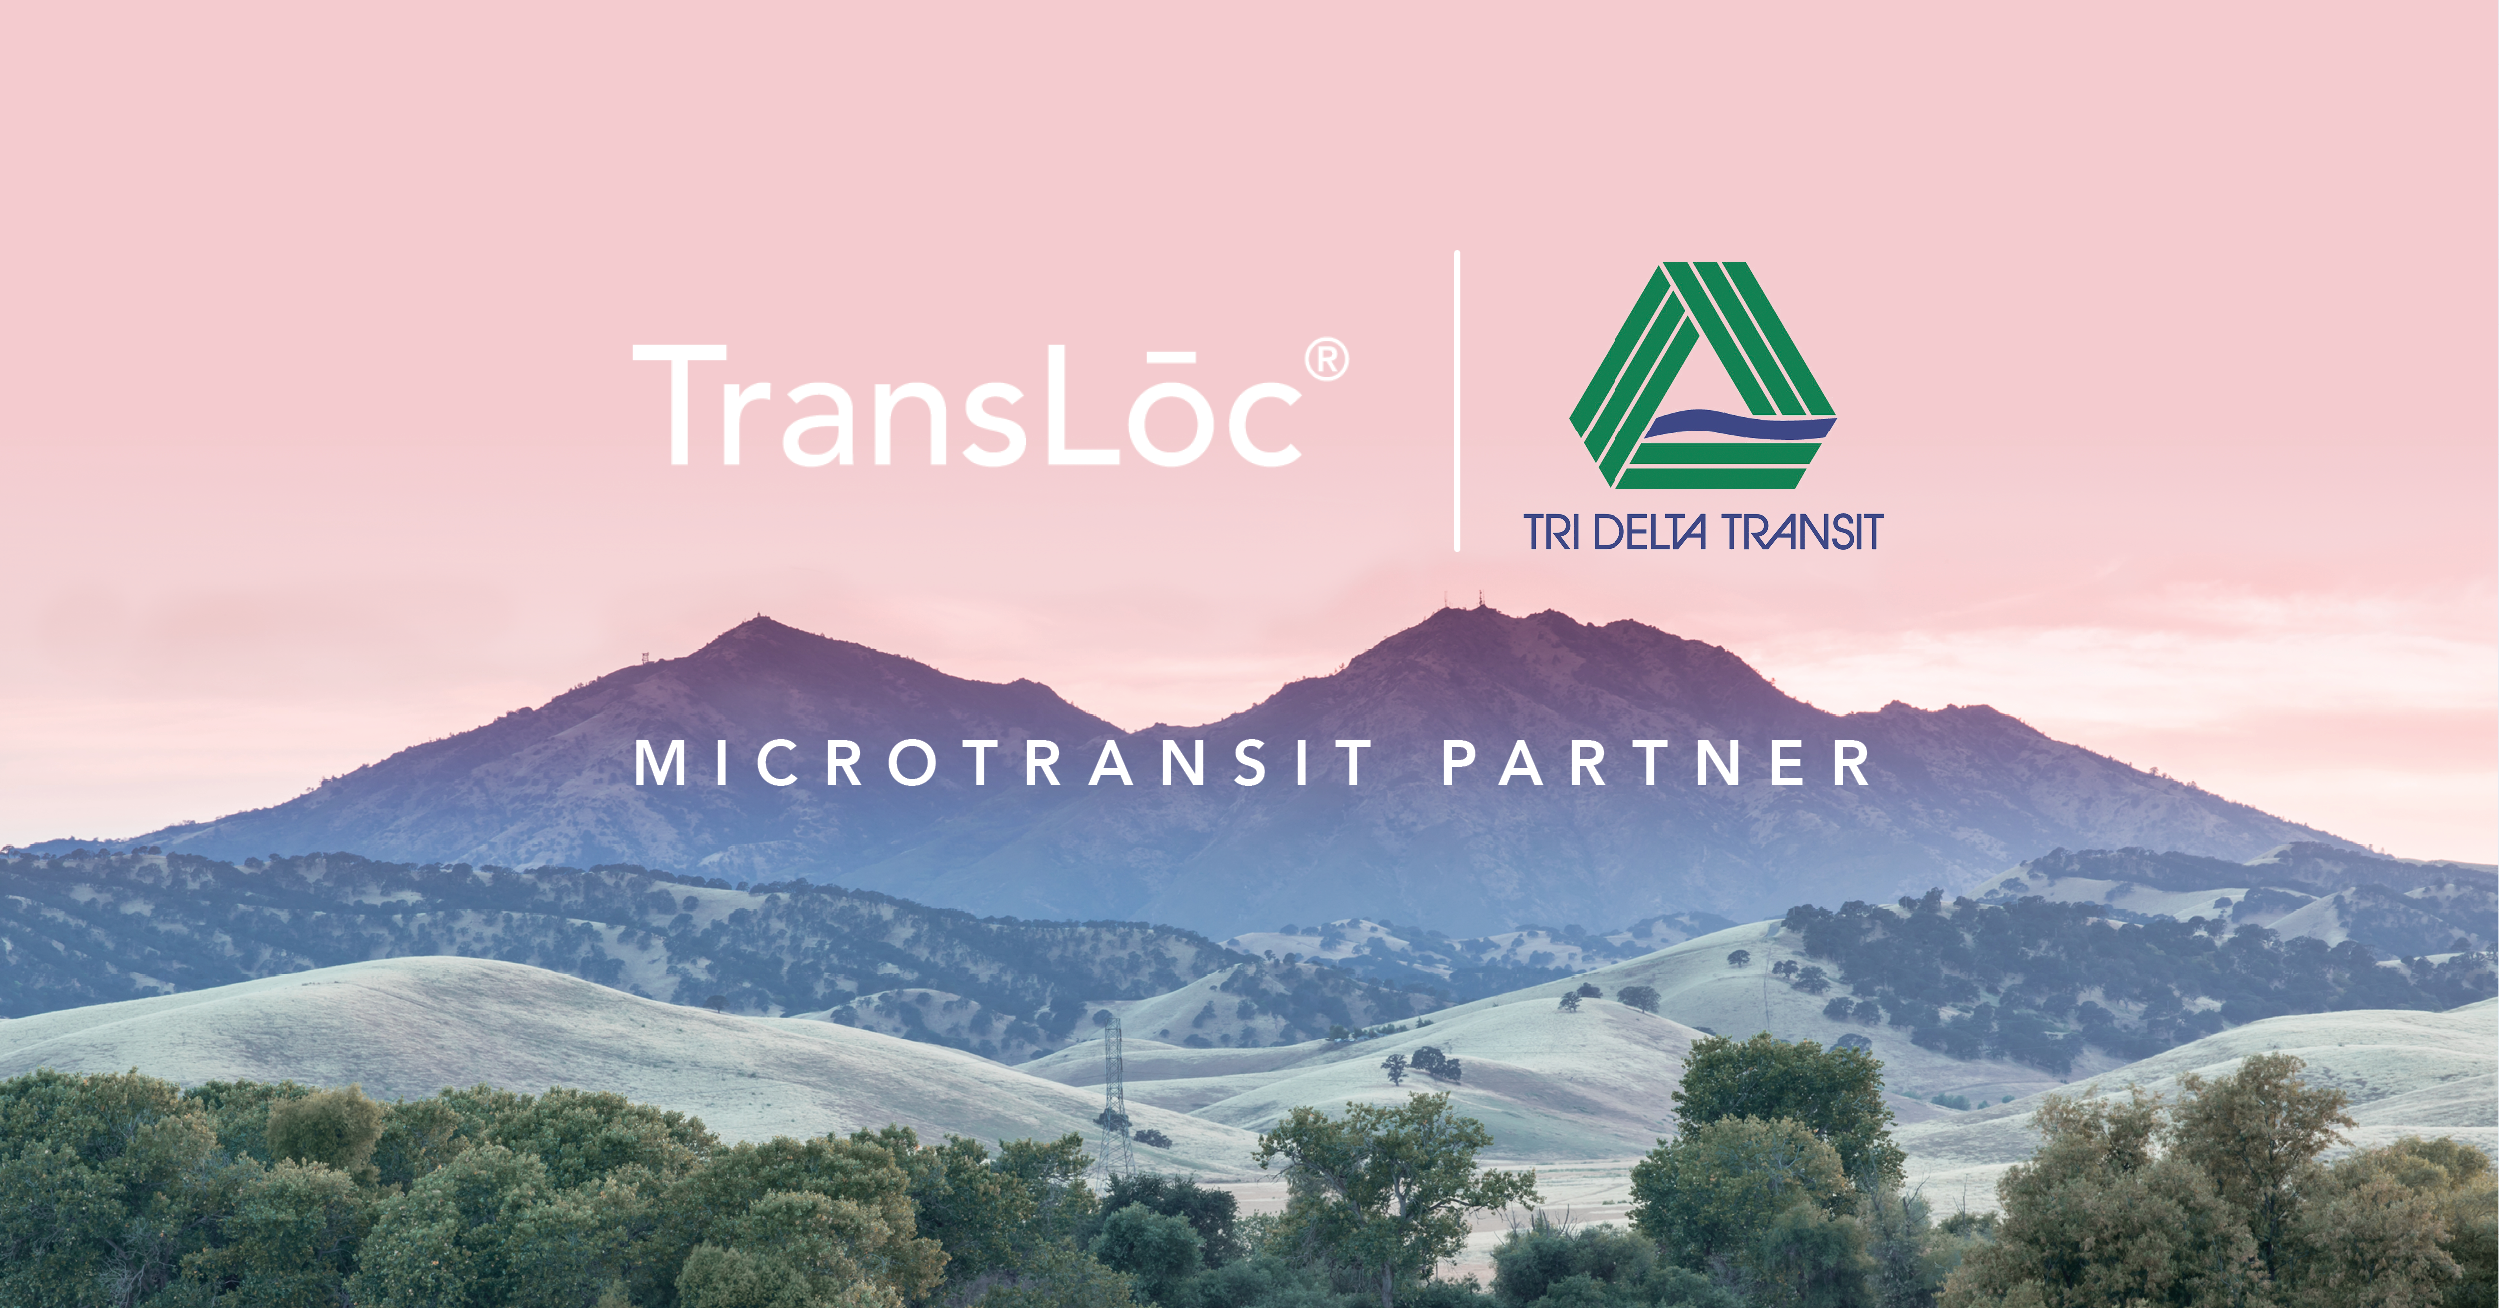 TransLoc, Tri Delta Transit Microtransit Partner